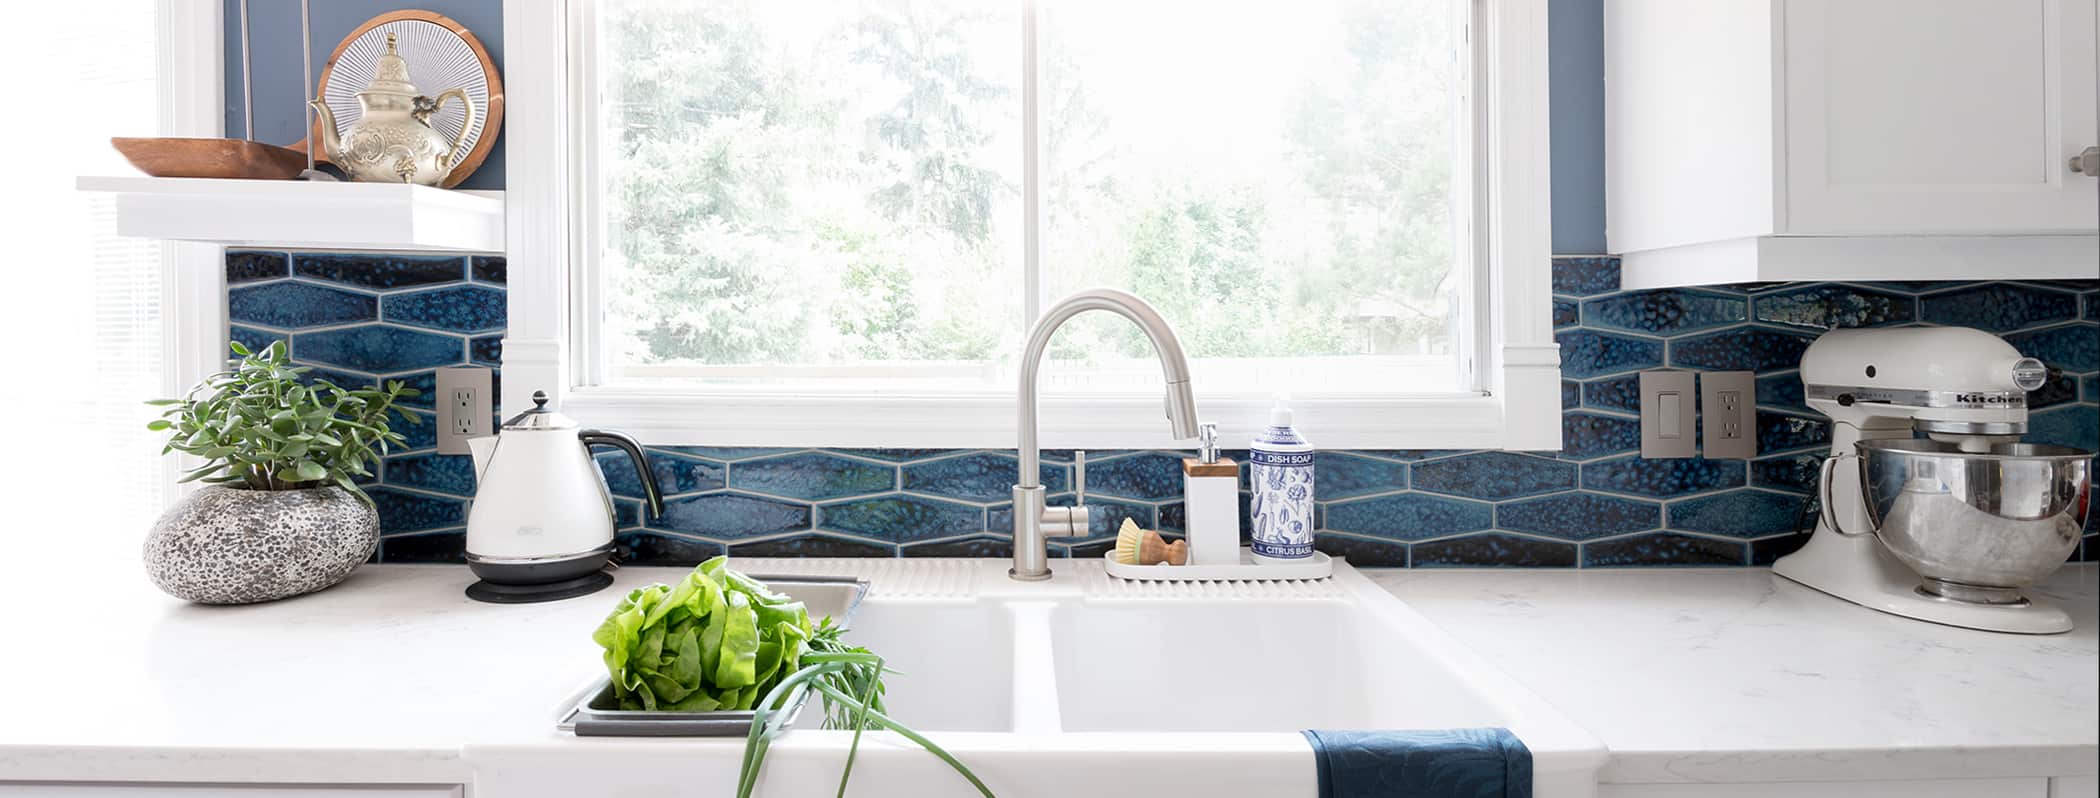 kitchen with apron sink blue backsplash tiles and quartz countertop